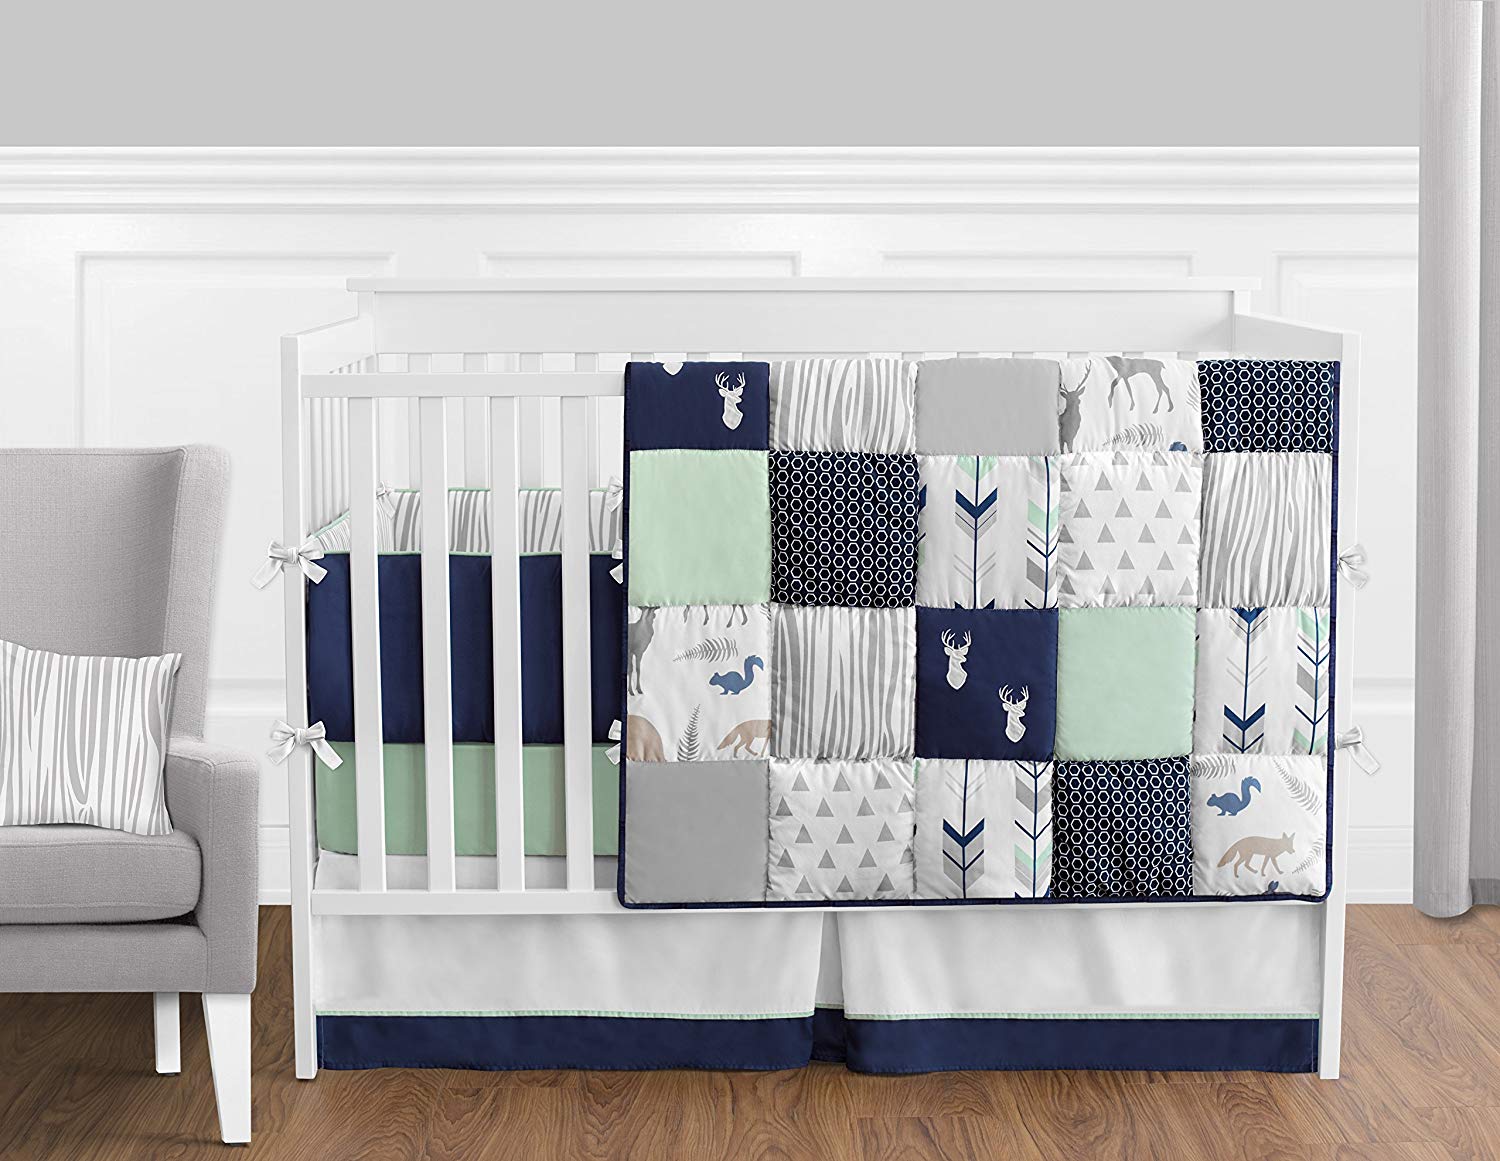 Baby nursery bedding sets amazon.com: sweet yo-yo designs 9-piece navy blue, mint and gray woody LVRHFZM